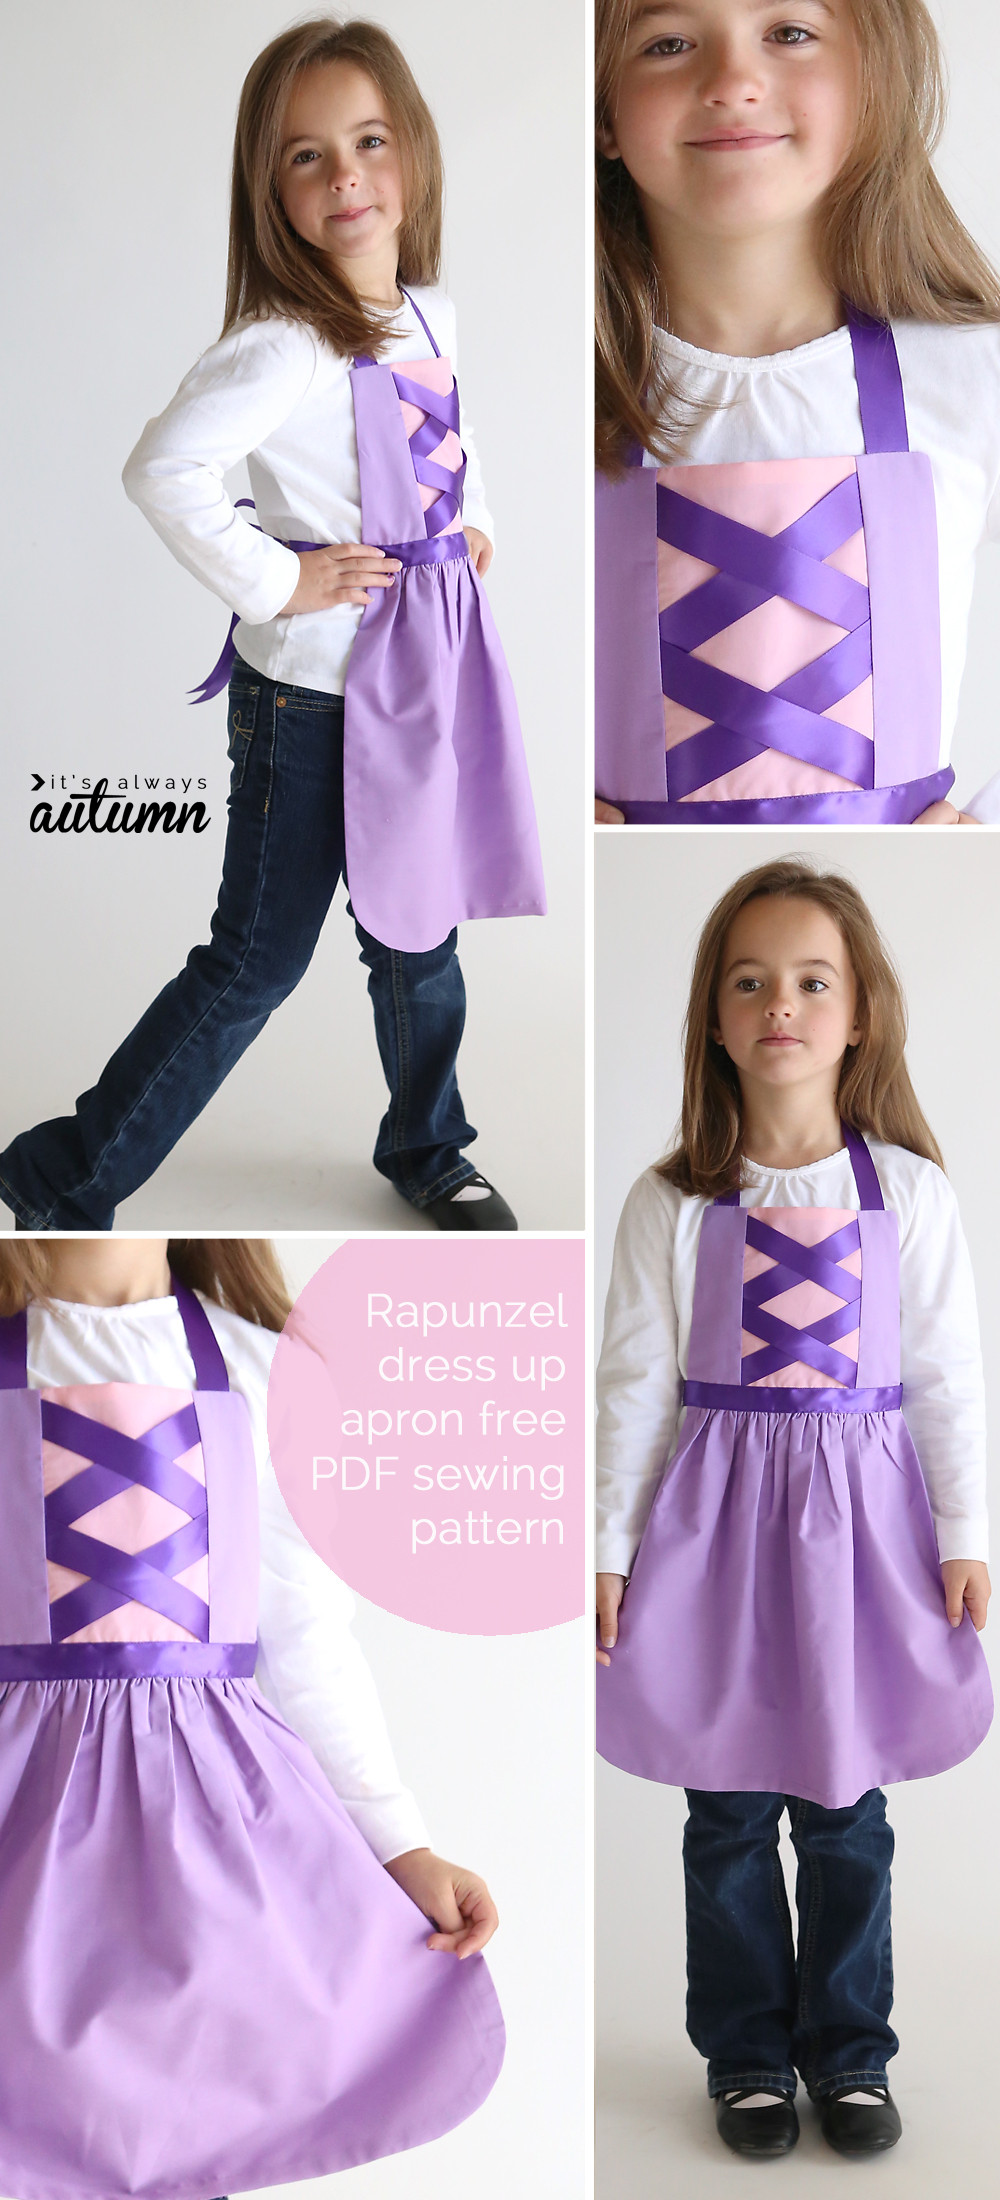 DIY Rapunzel Costume
 free sewing pattern for Rapunzel dress up apron It s